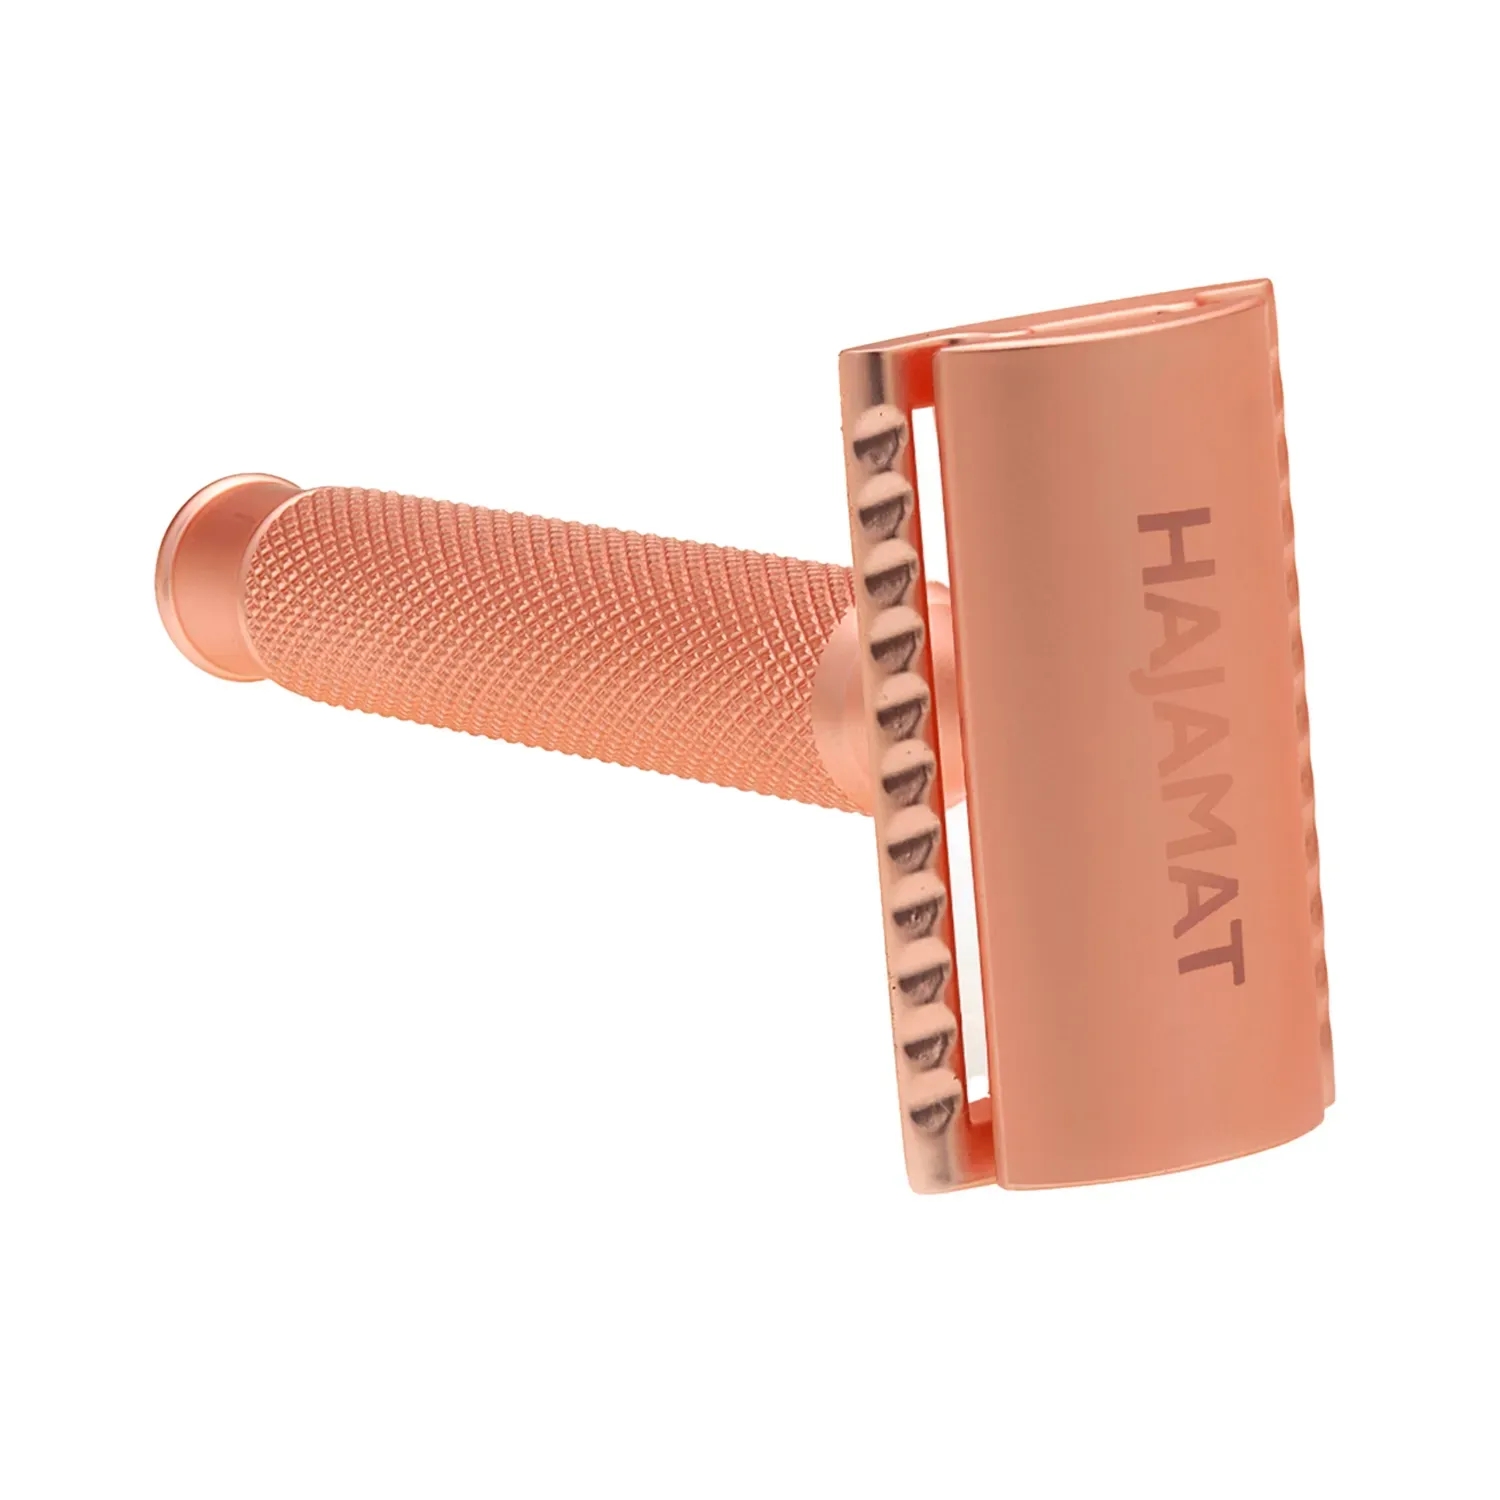 Hajamat | Hajamat Scythe Double Edge Safety Razor, Stainless Steel 304, Rose Gold Finish